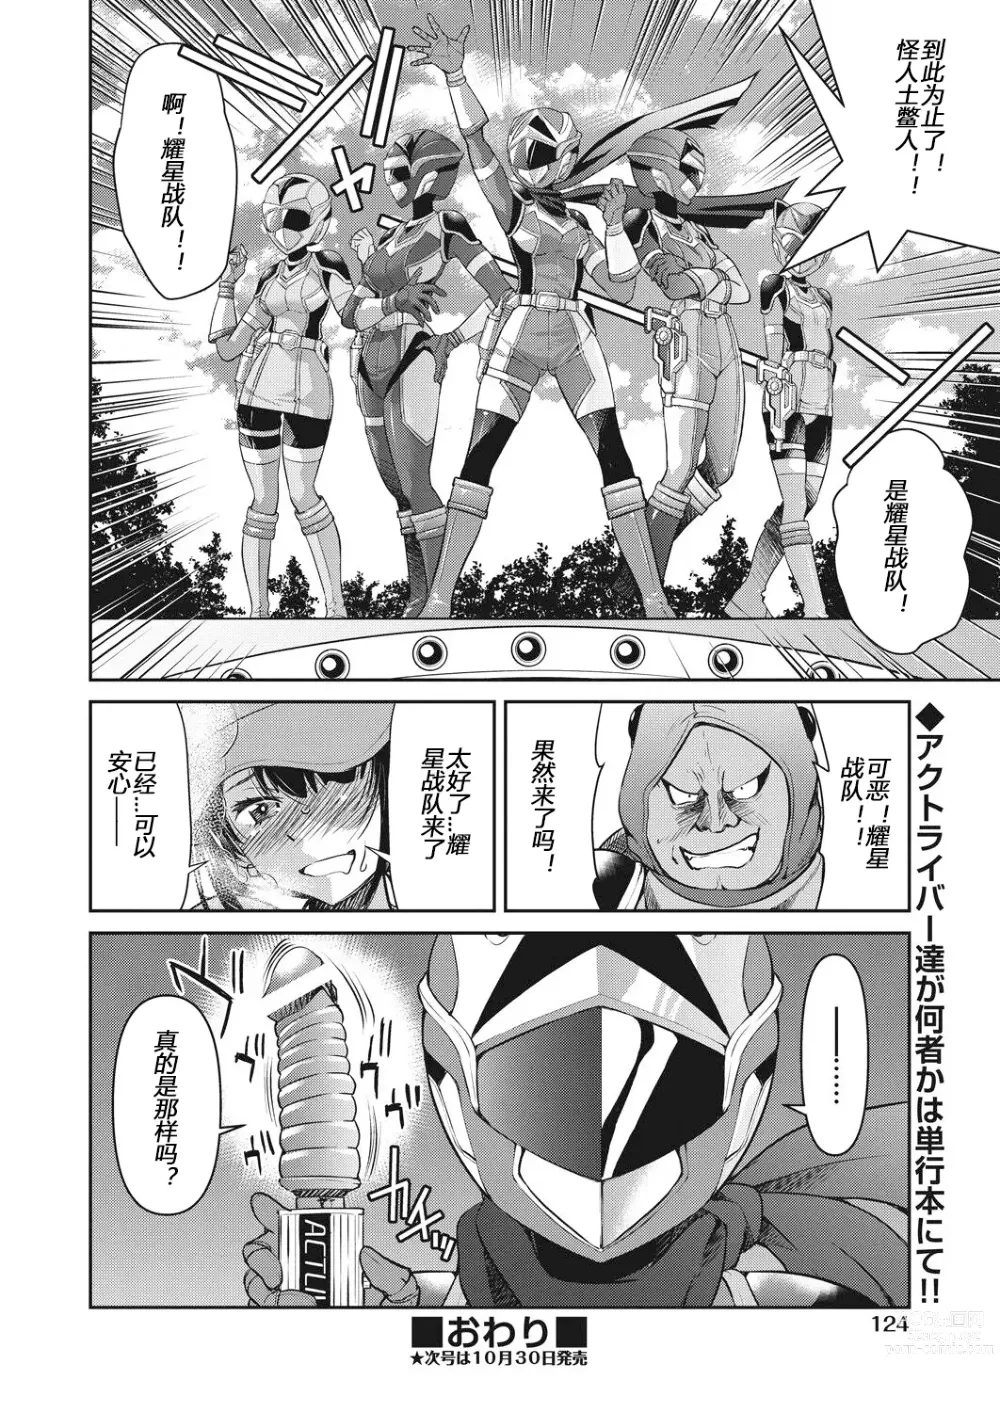 Page 204 of manga Yousei Sentai Actliver